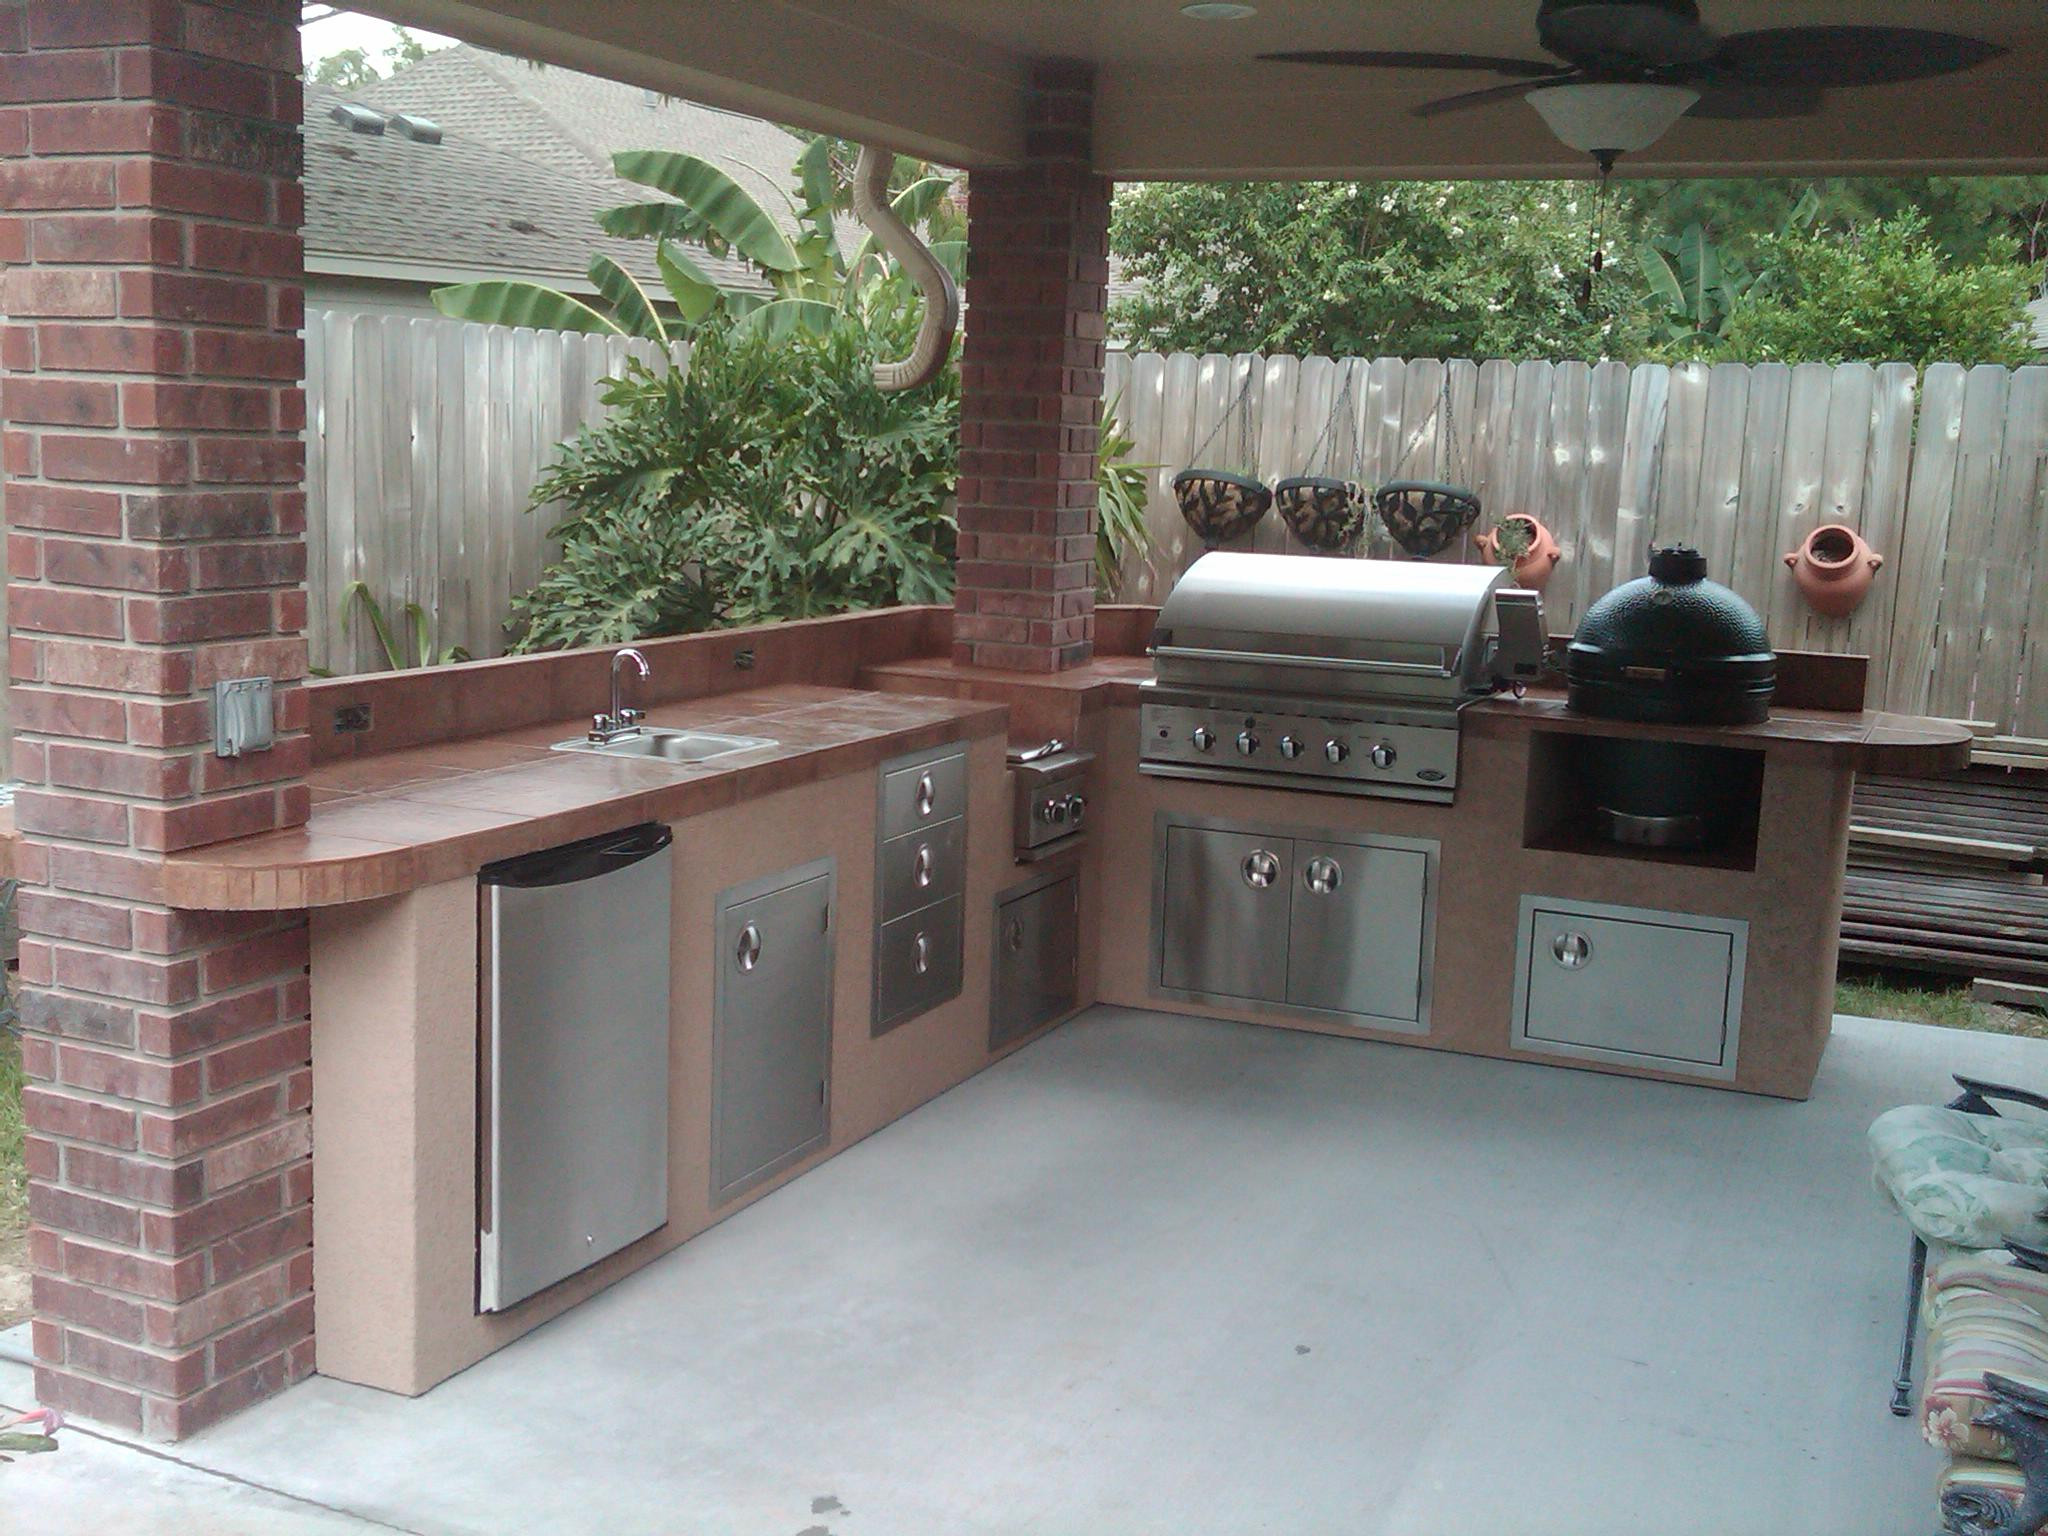 Gas Grill For Outdoor Kitchen
 Outdoor Kitchen Equipment Houston Outdoor Kitchen Gas